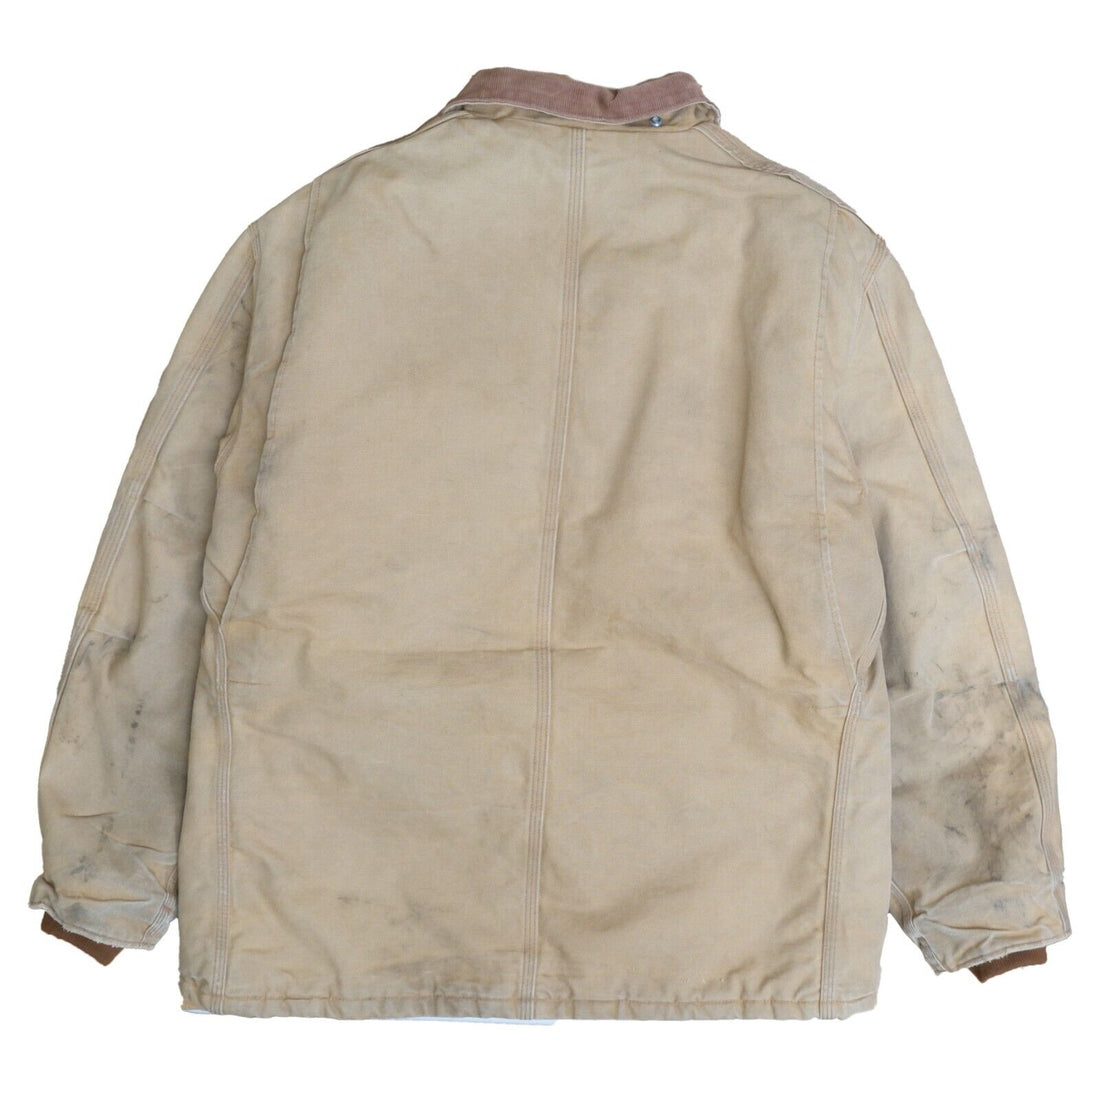 Vintage Carhartt Canvas Arctic Work Jacket Size Large Khaki Insulated